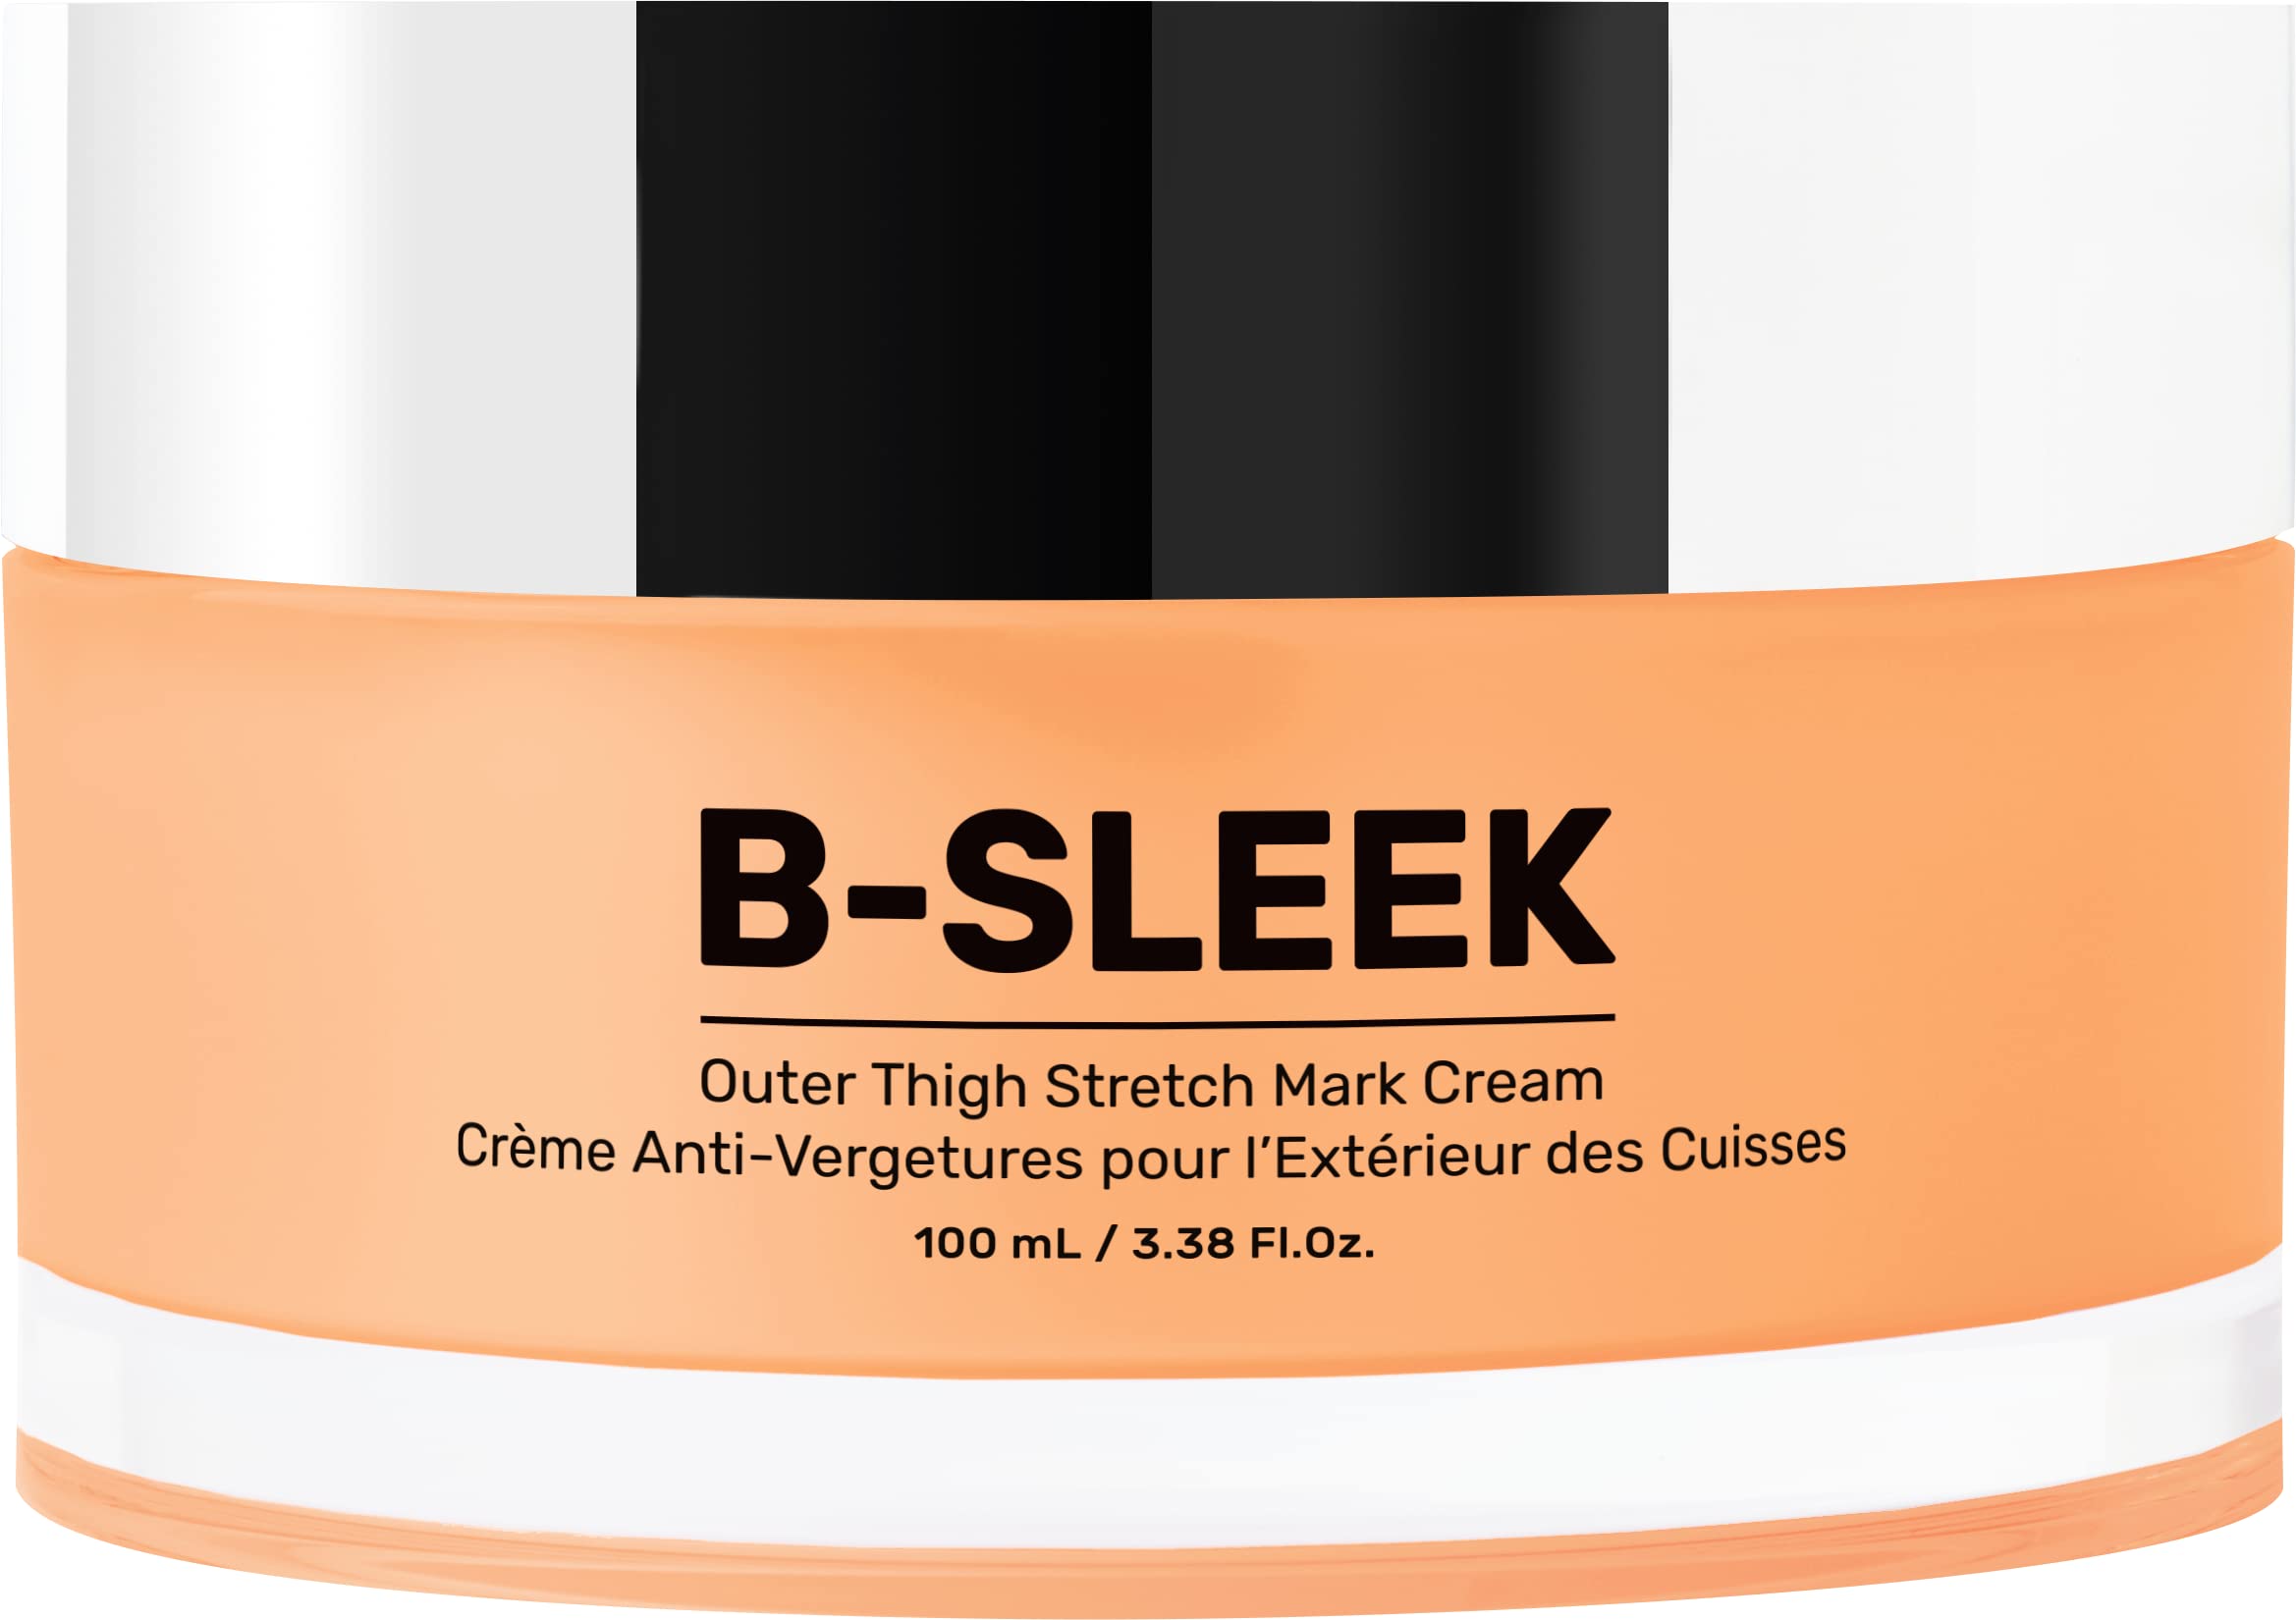 MAËLYS B-SLEEK Outer Thigh Stretch Mark Cream